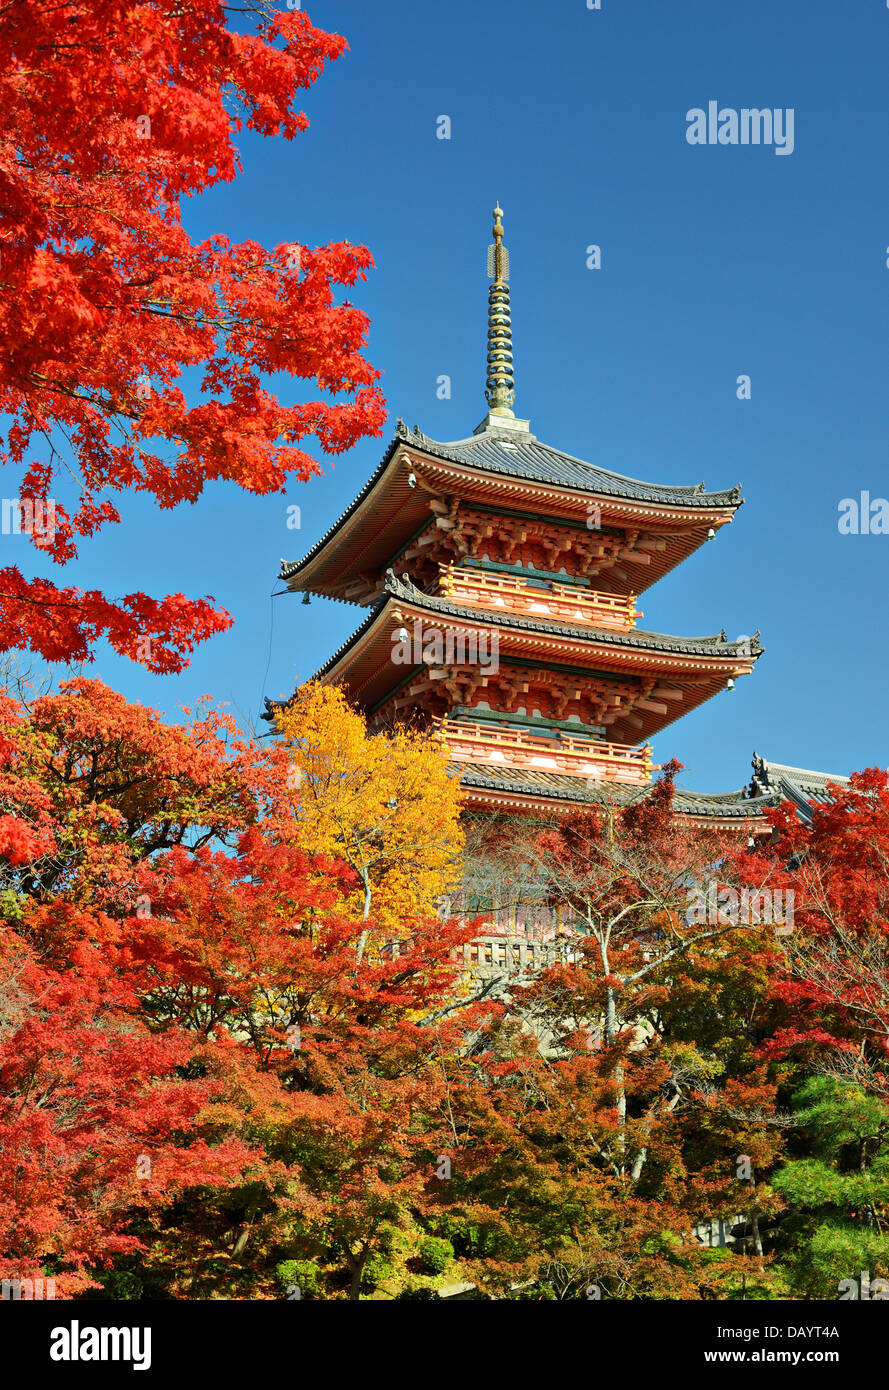 Kiyomizu-dera pagoda with fall colors in Kyoto, Japan. Stock Photo